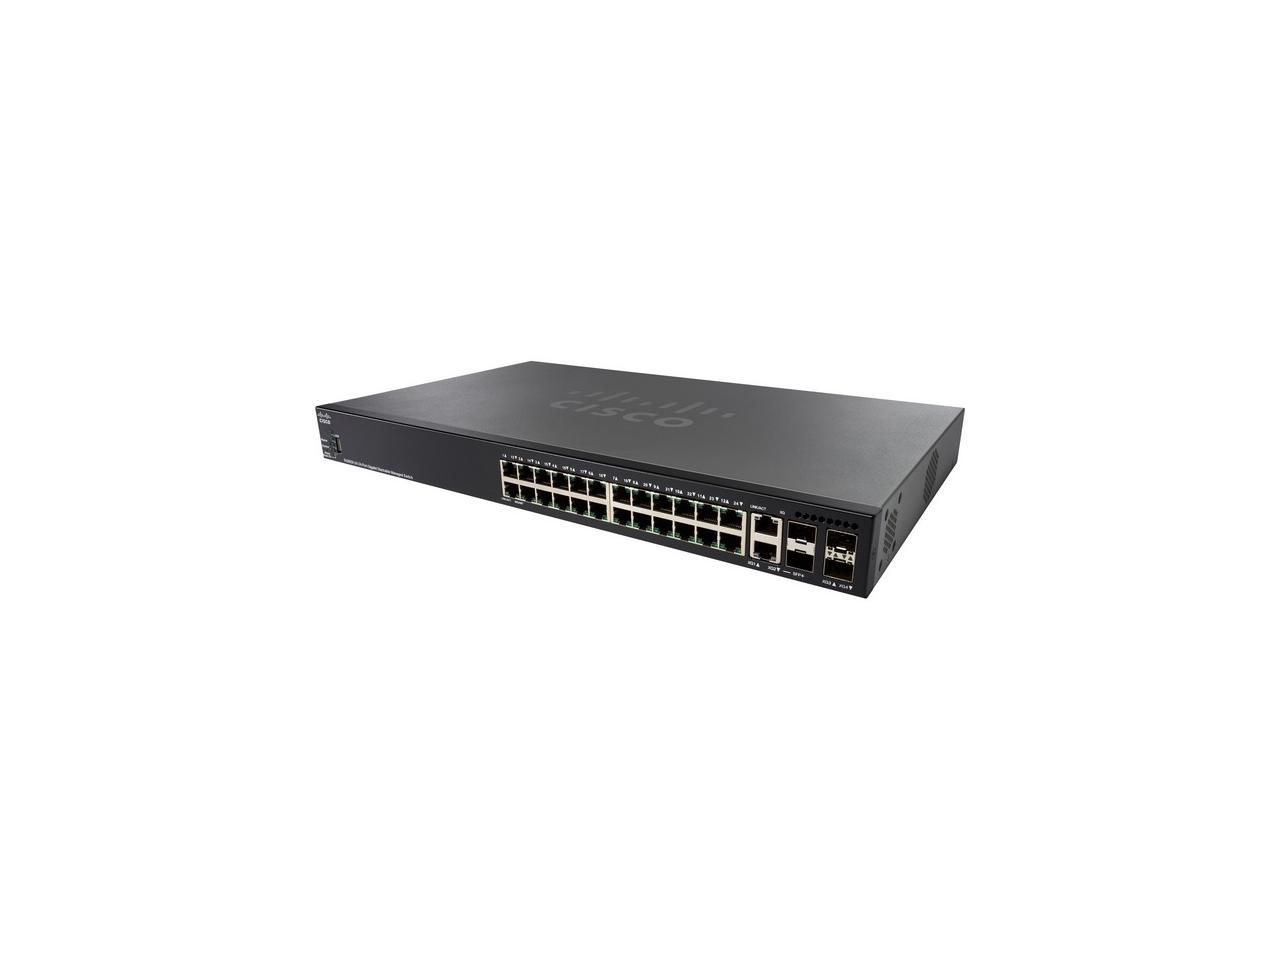 Cisco SG350X-24-K9-NA Layer 3 Switch - 24 Ports Manageable - Newegg.com